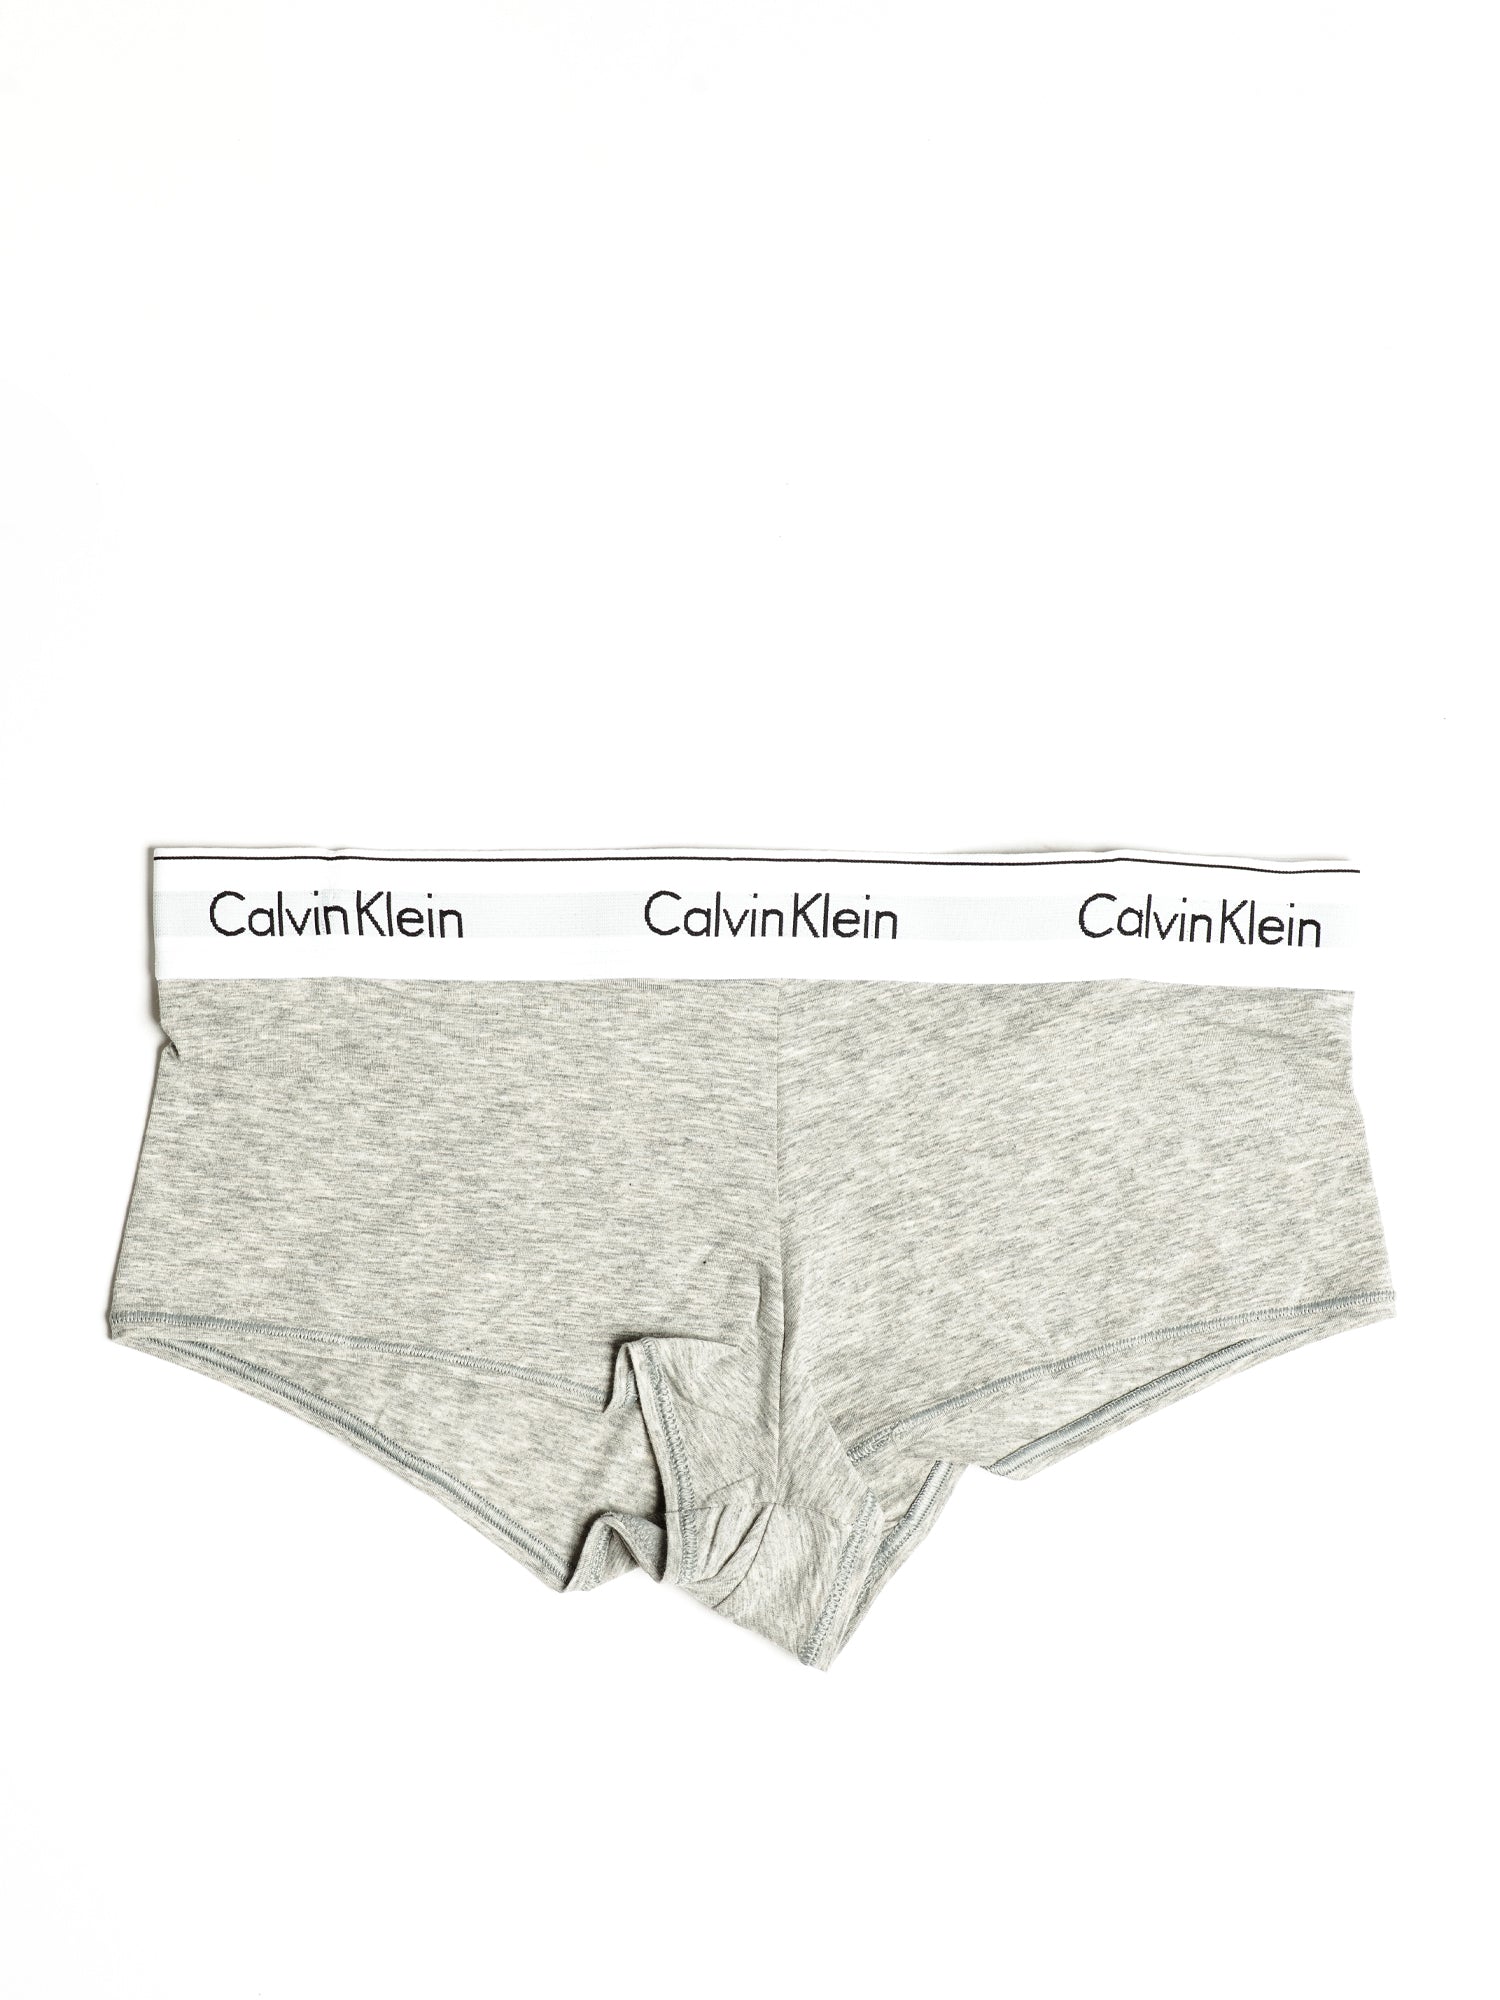 Calvin Klein Boxer Shorts Women’s, Size S